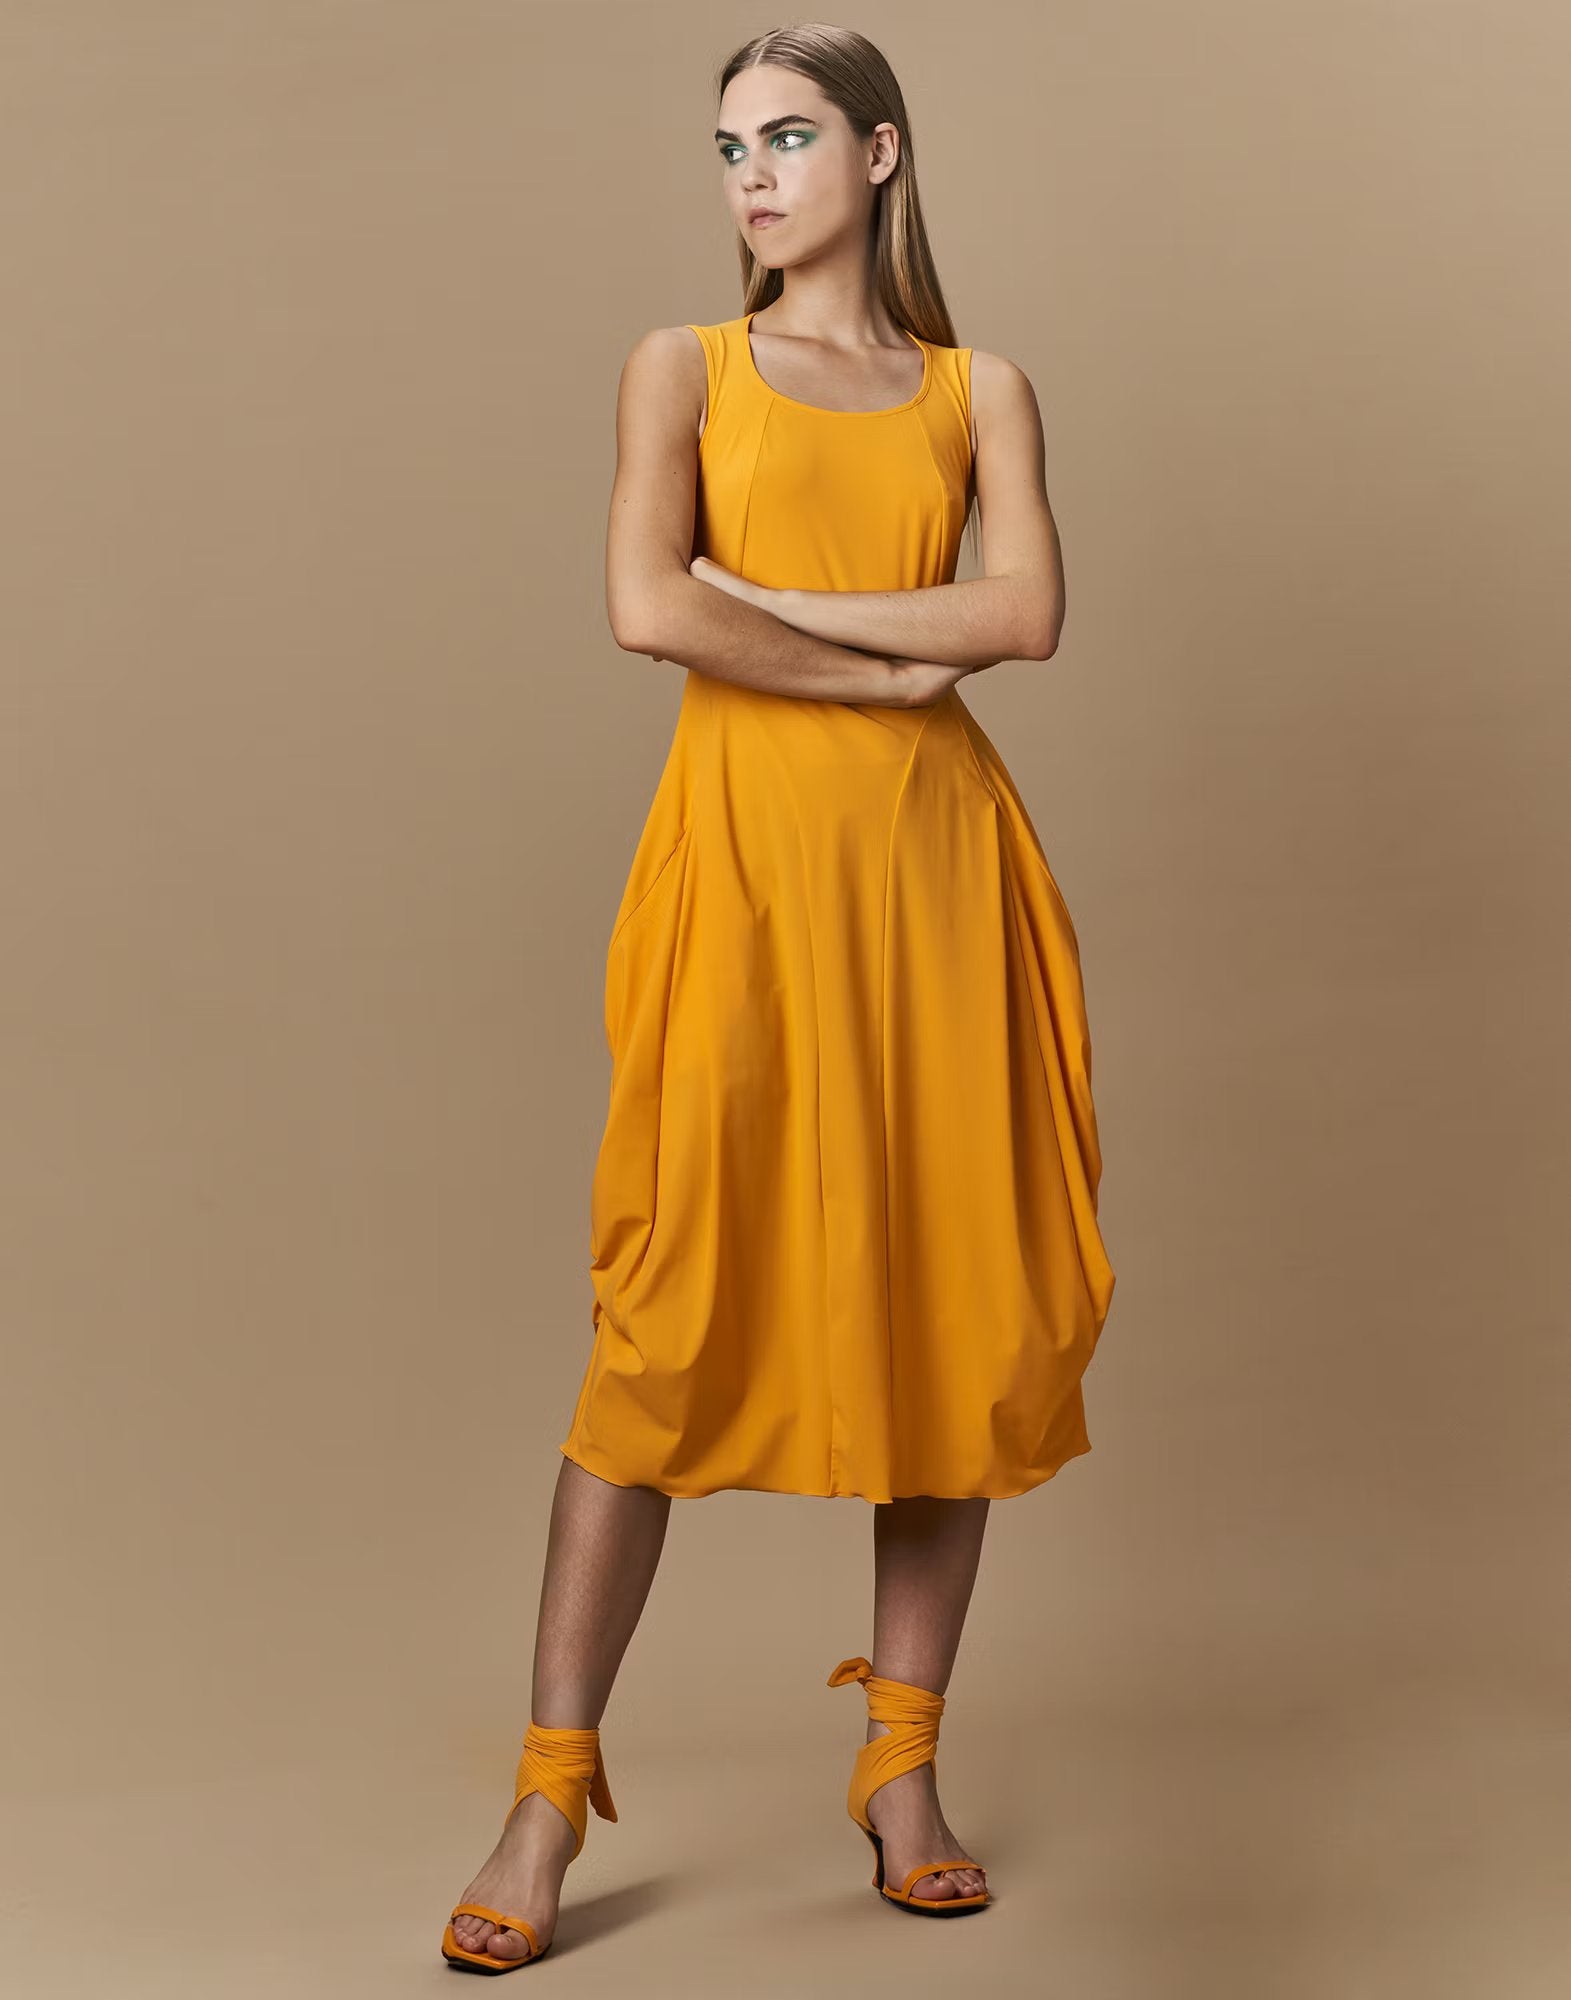 At length yellow dress